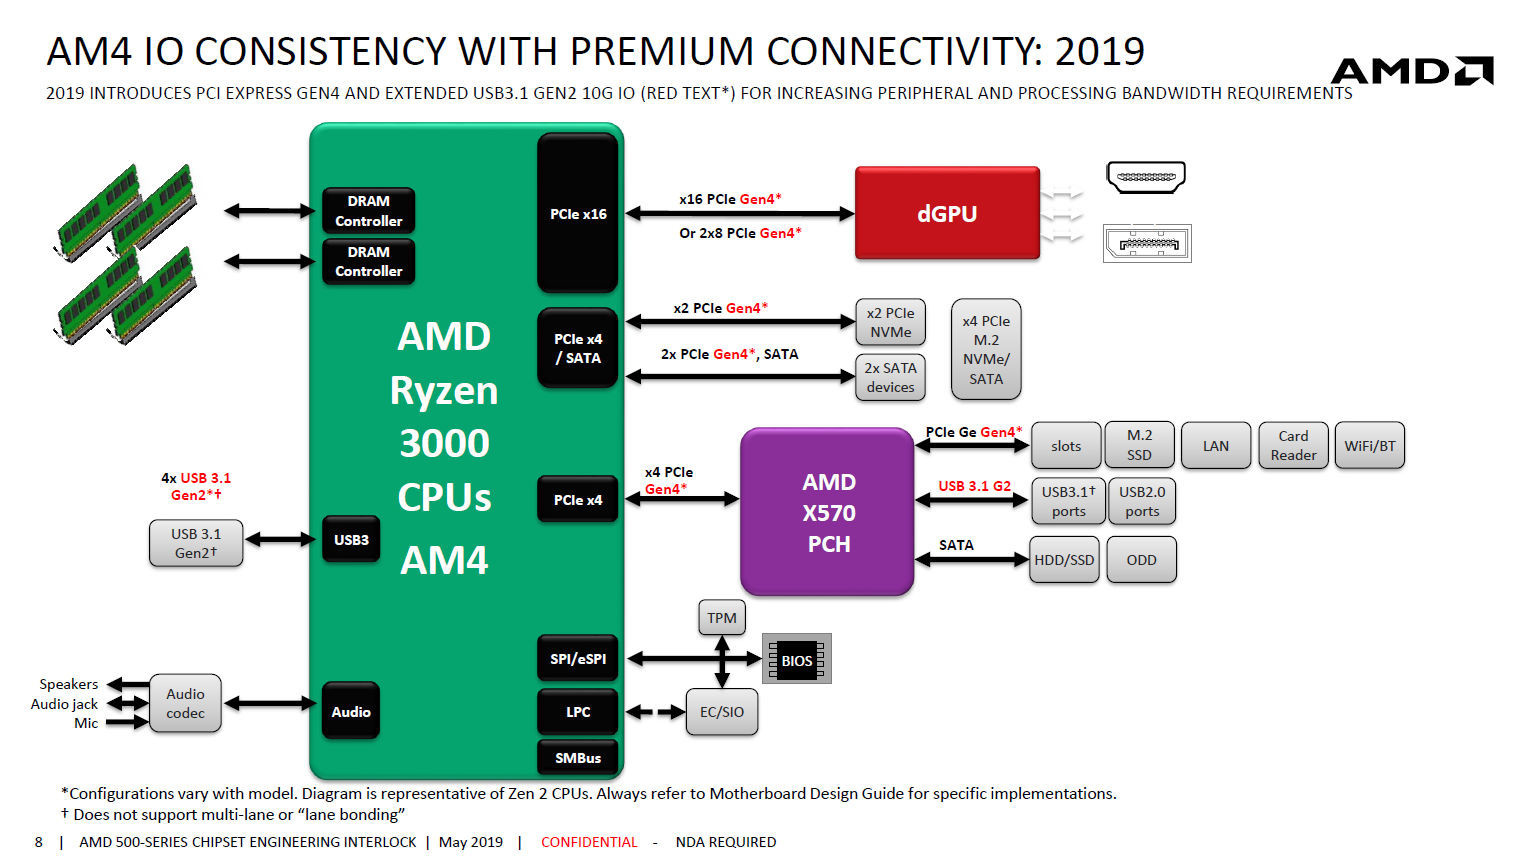 Fiyat-performansa oynayan AMD stratejisi tarih oluyor